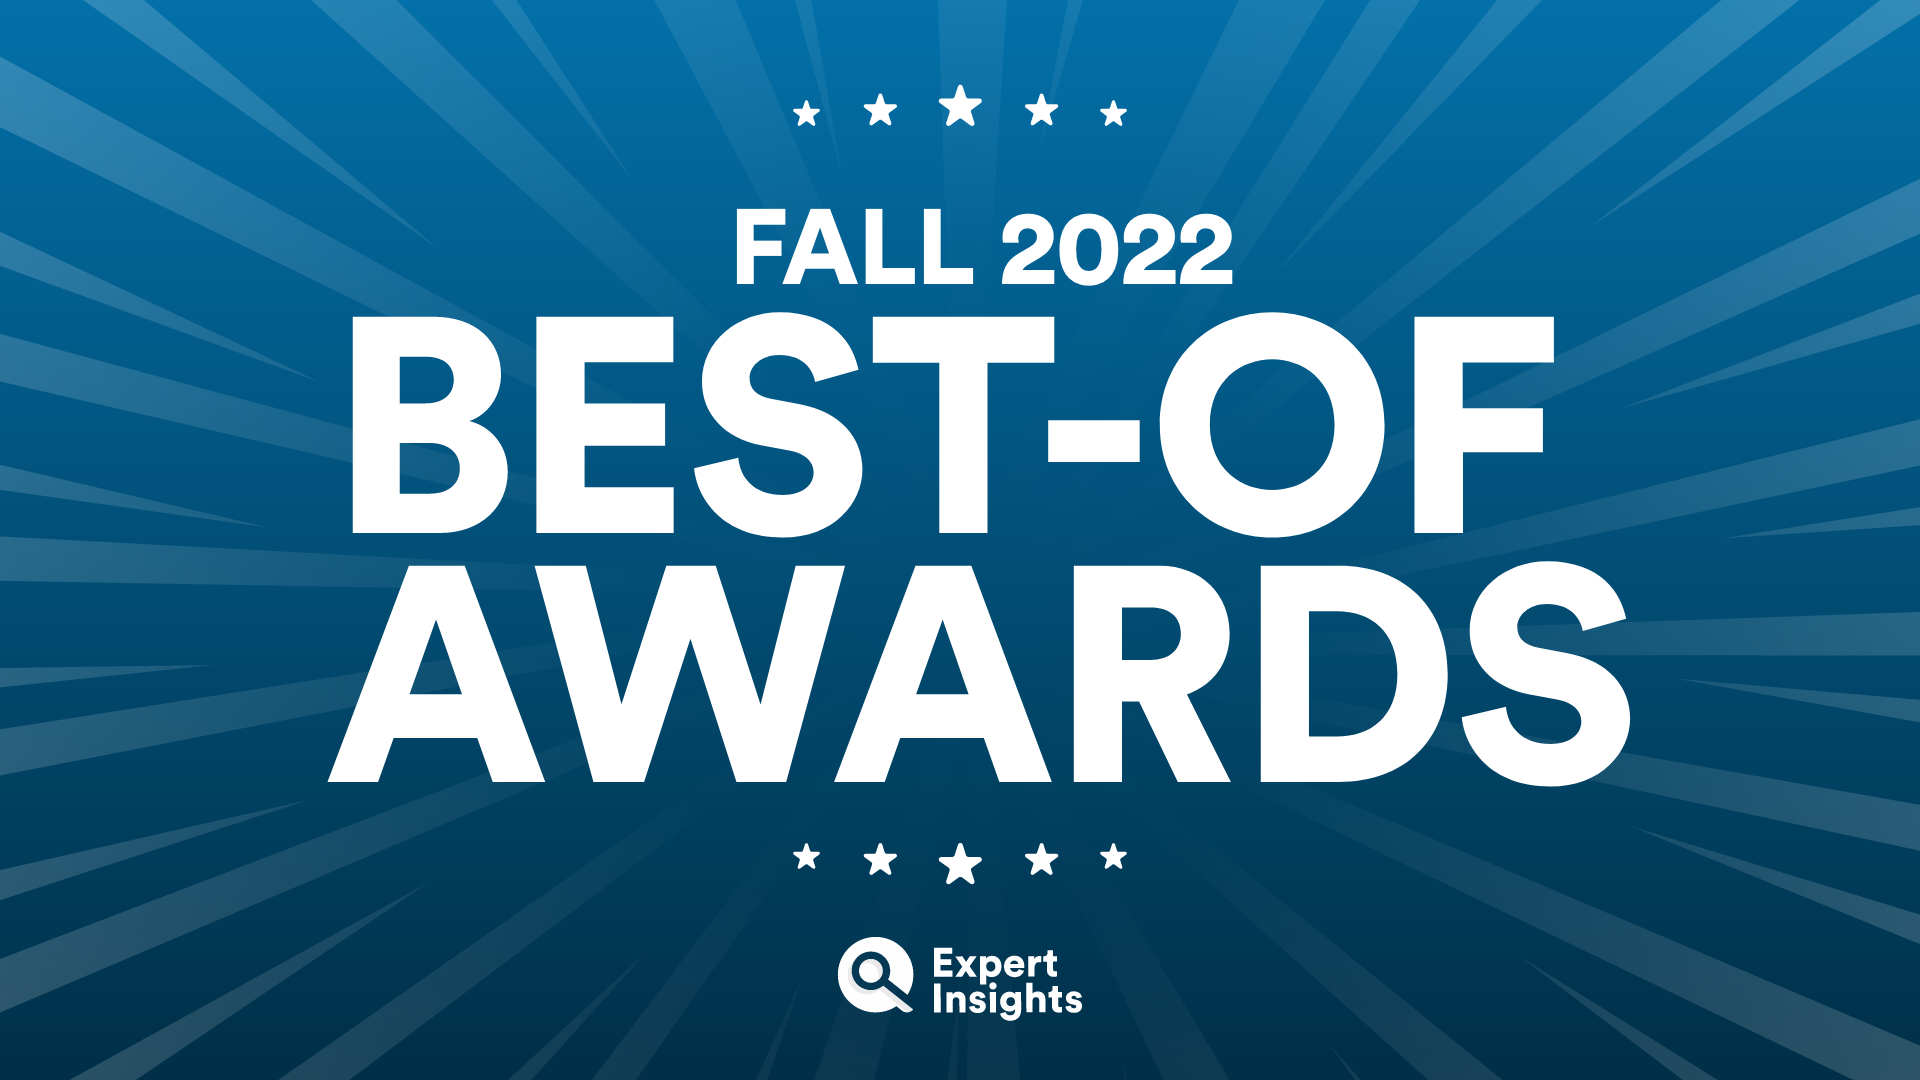 Expert Insights Best of Awards 2022 badge